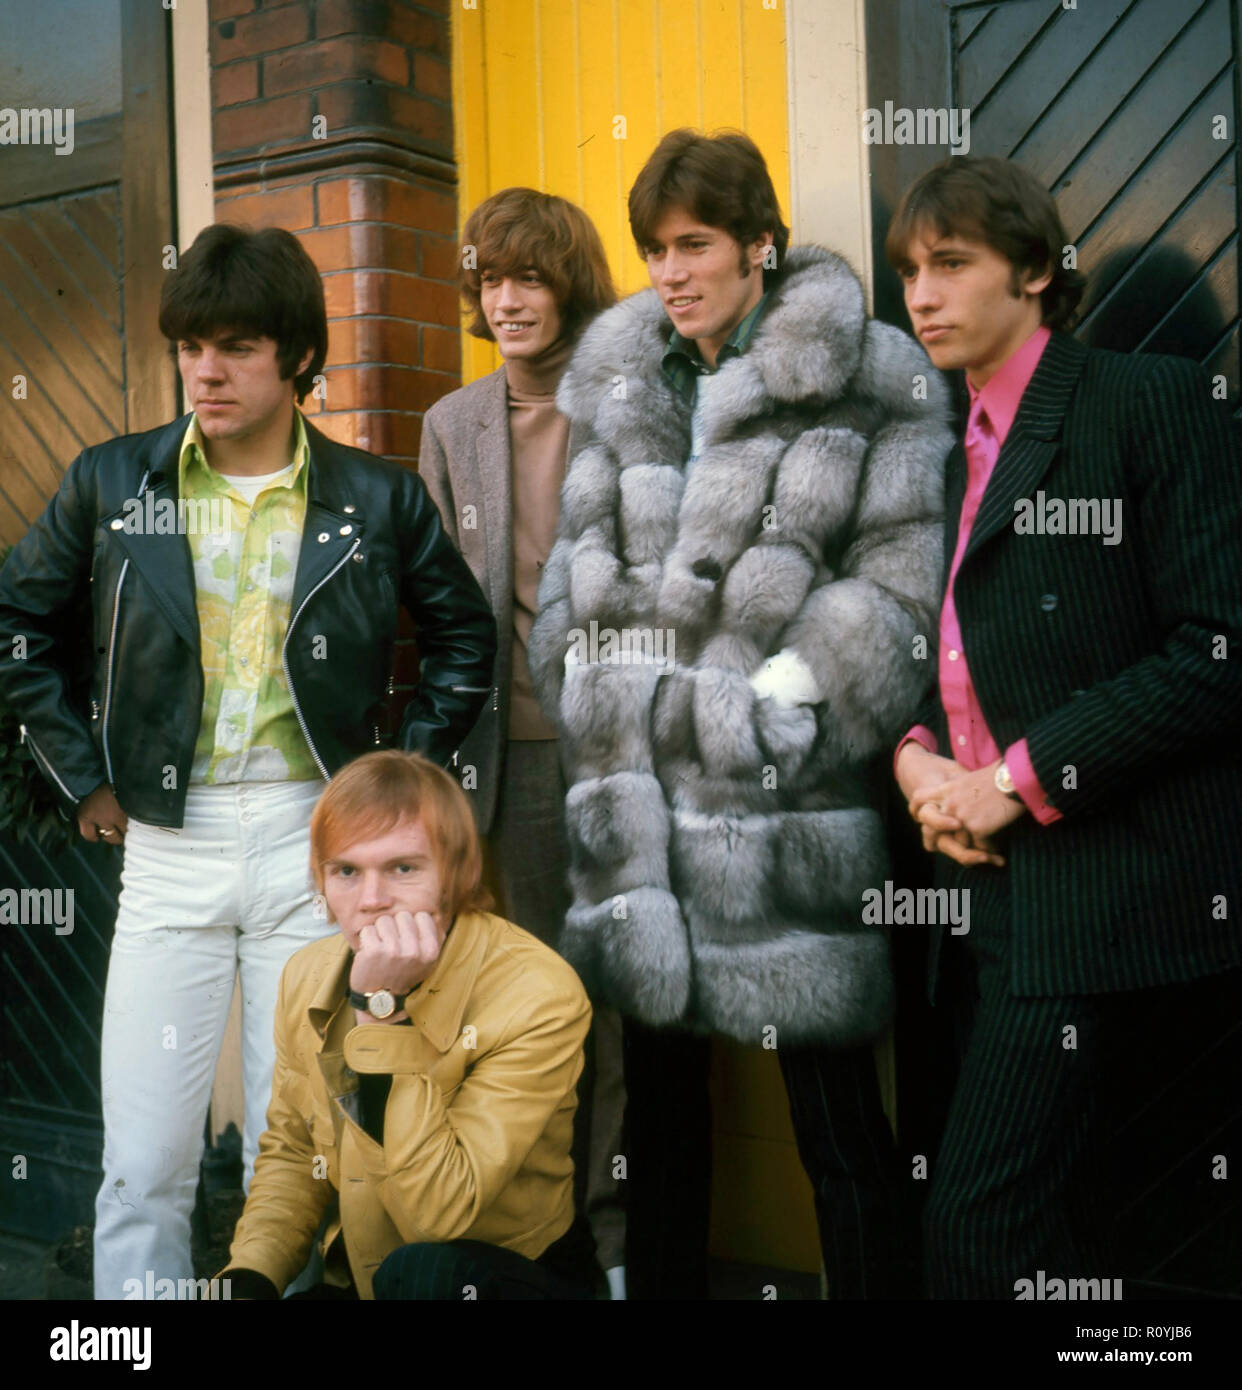 BEE GEES REGNO UNITO gruppo pop nel 1968. Da sinistra: Vince Melouney, Robin Gibb, Colin Peterson (inginocchiato) Barry Gibb, Maurice Gibb. Foto: Tony Gale Foto Stock